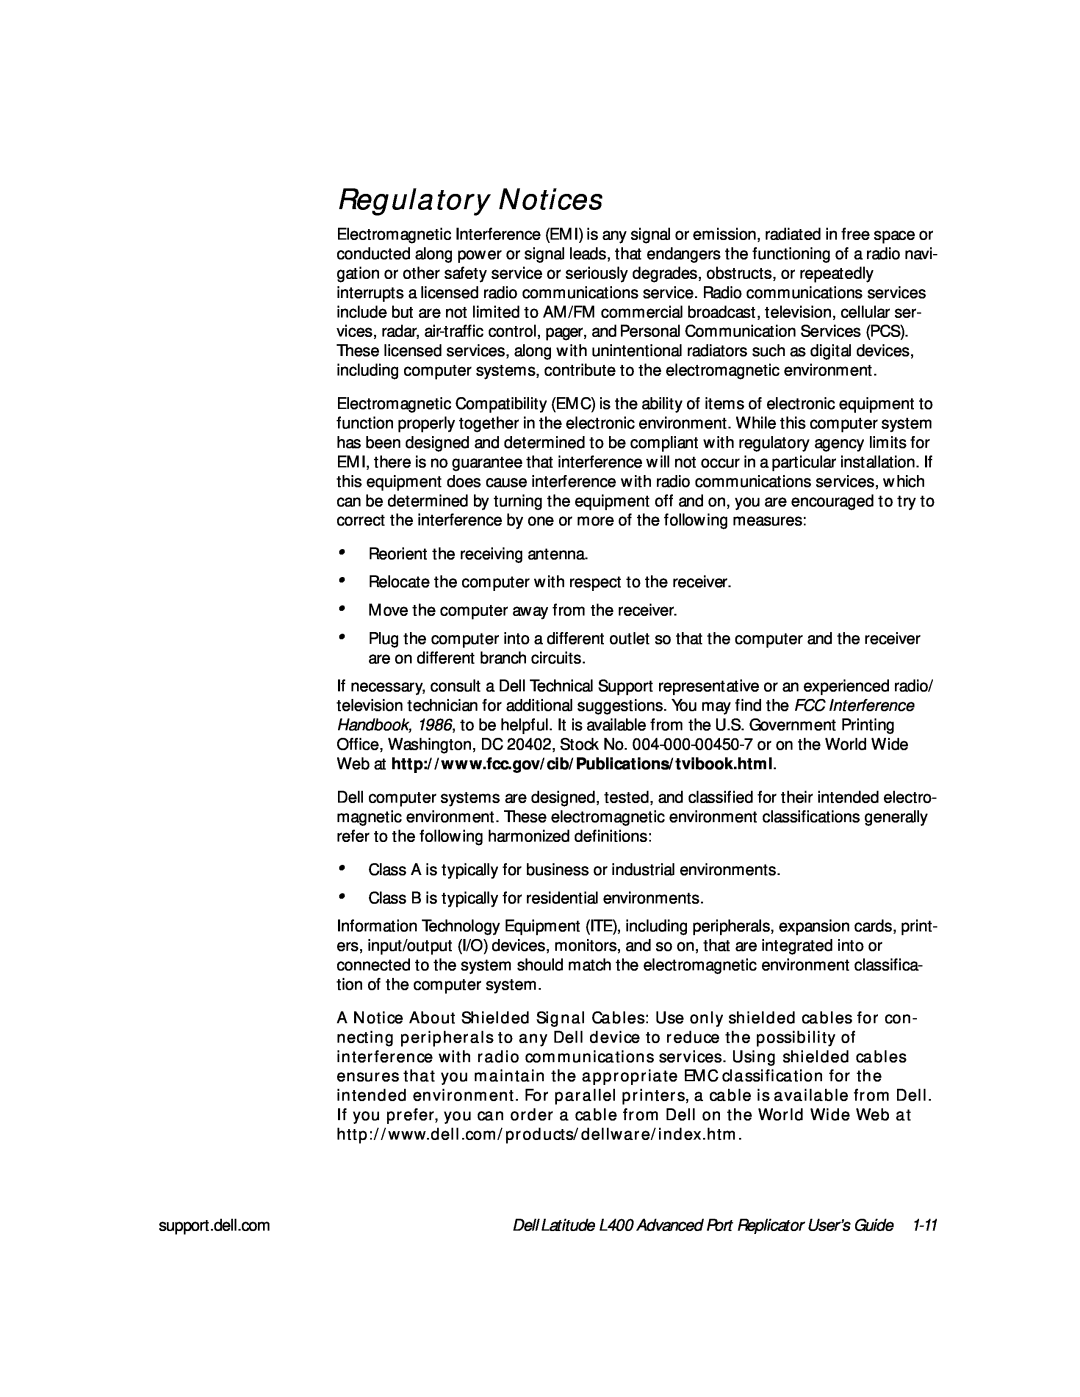 Dell L400 manual Regulatory Notices 